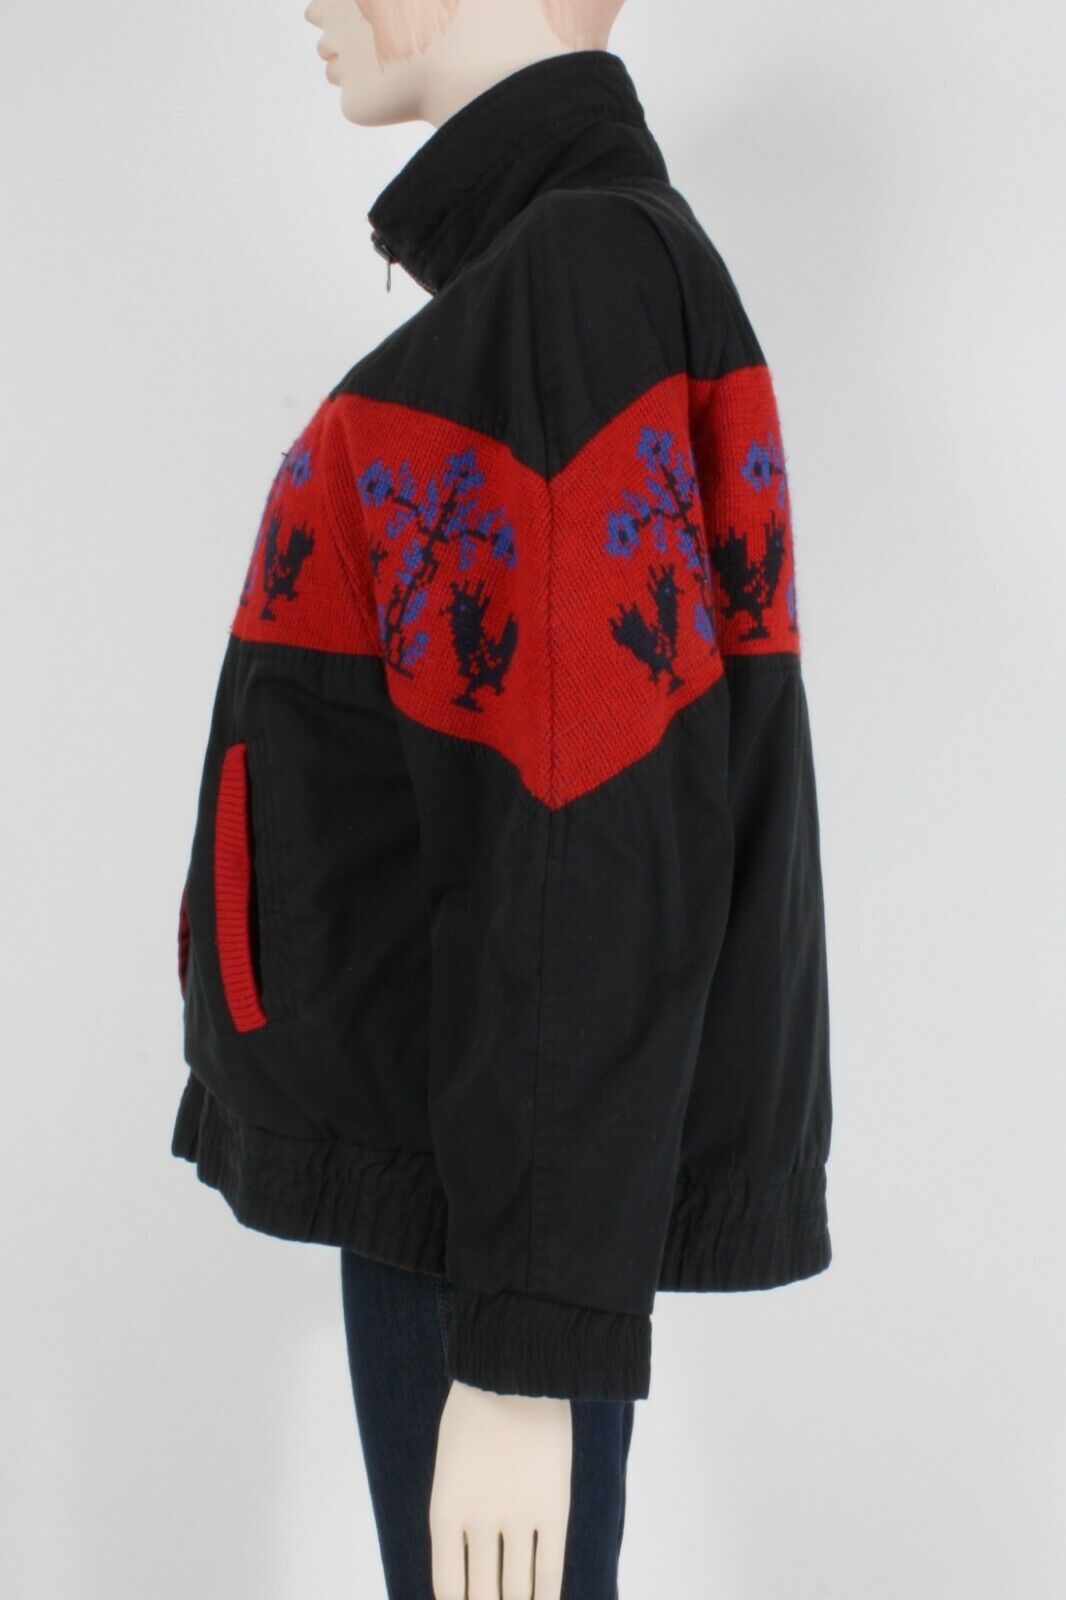 SALE Reversible Puffer Jacket Coat XL Vintage 80s… - image 3